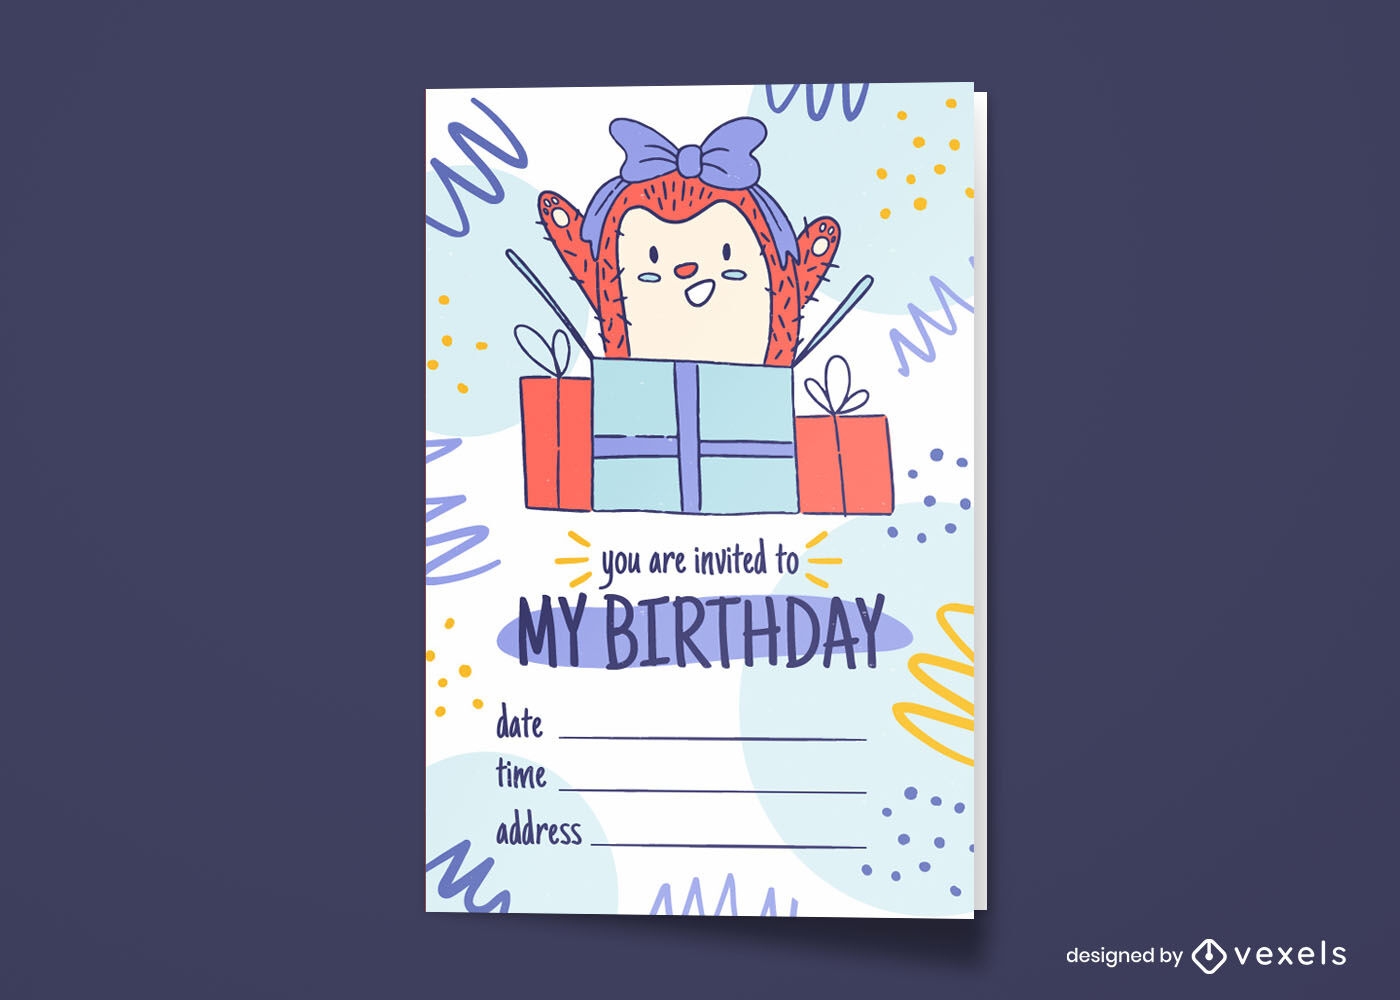 Hedgehog birthday invitation card